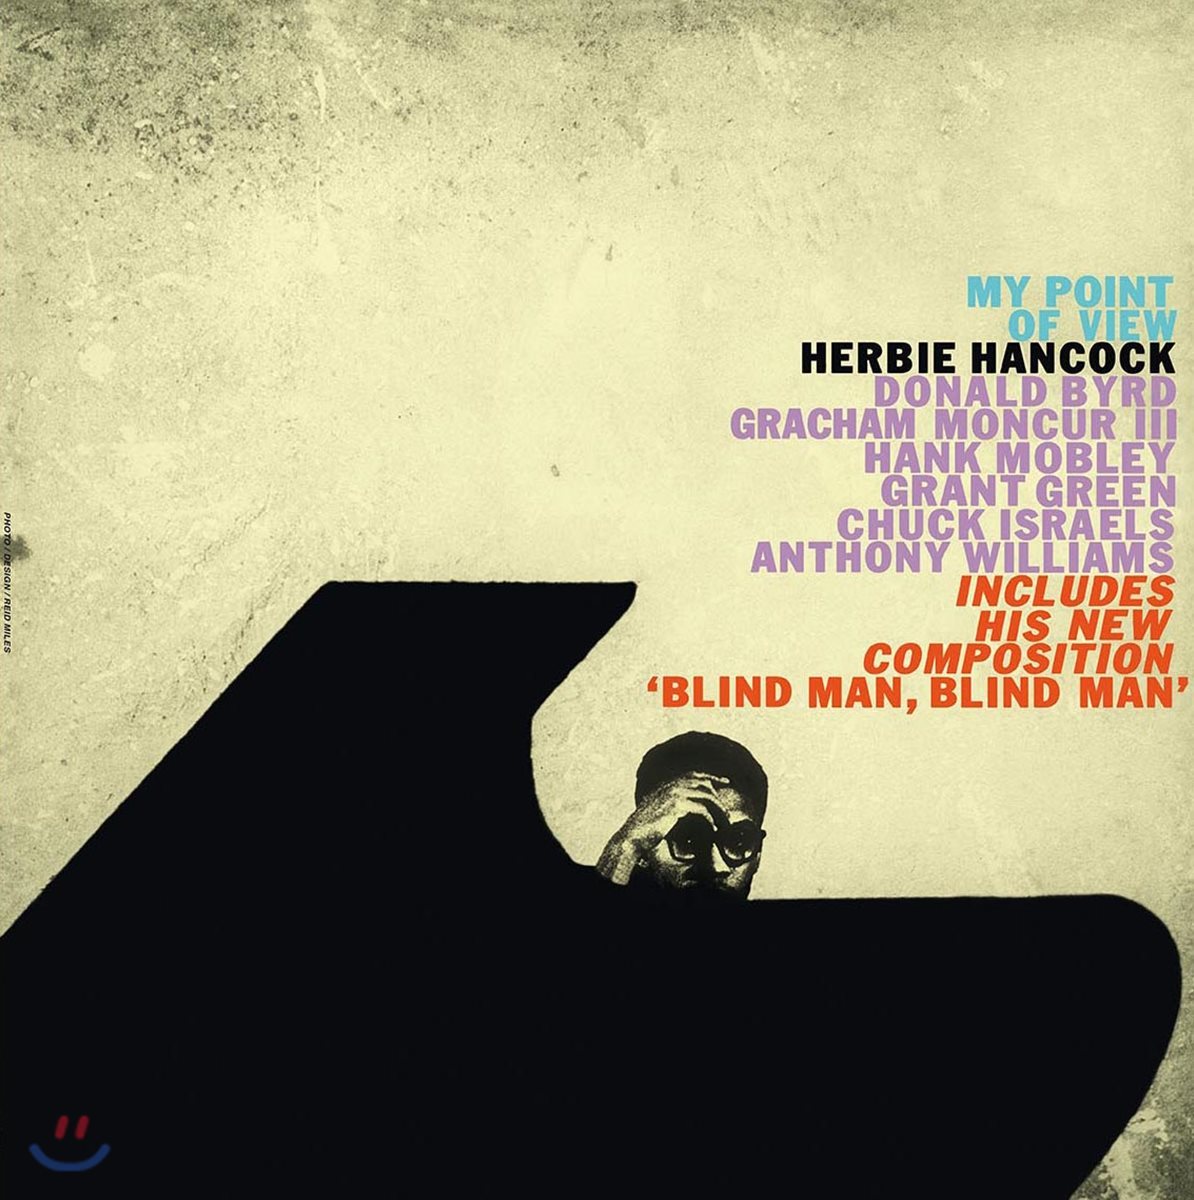 Herbie Hancock (허비 행콕) - My Point Of View [Deluxe Gatefold Edition LP]